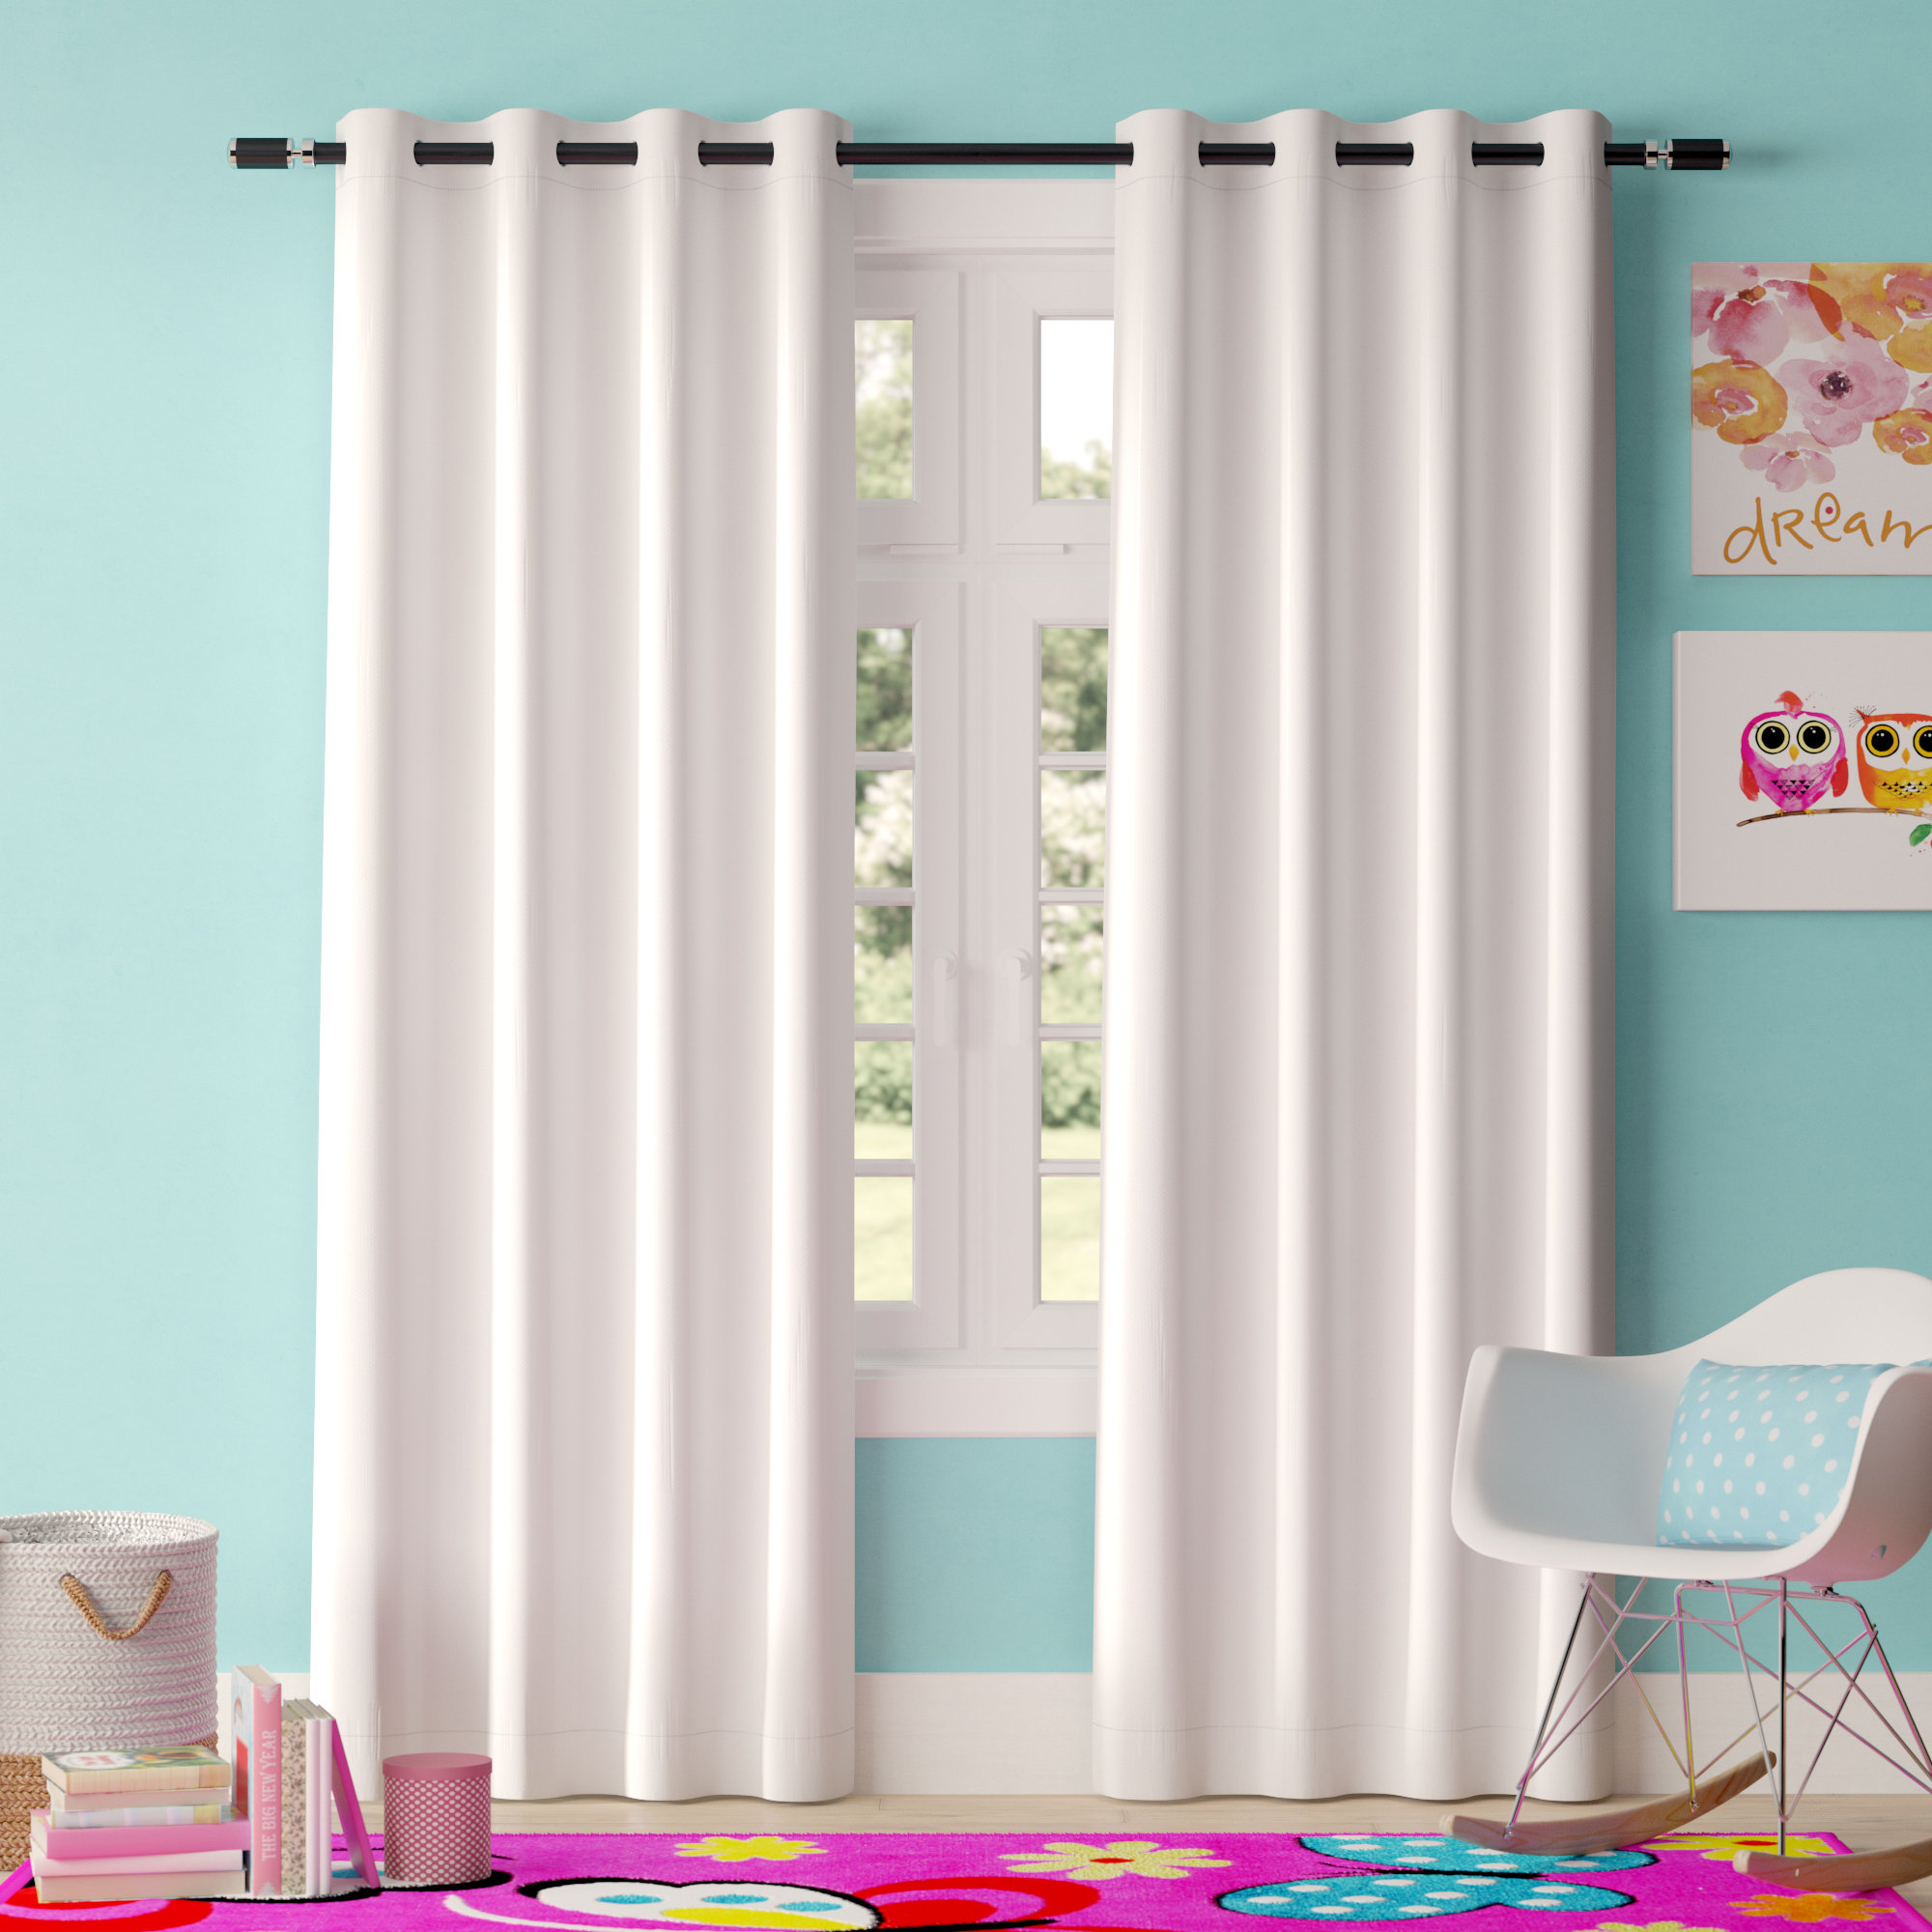 20 Pack Stainless Steel Curtain Grommets, 2 in 1 Metal Curtain Ring Eyelets Metal Grommet ABS Plastic Curtain Eyelet Clips ,1.65 42mm Inner